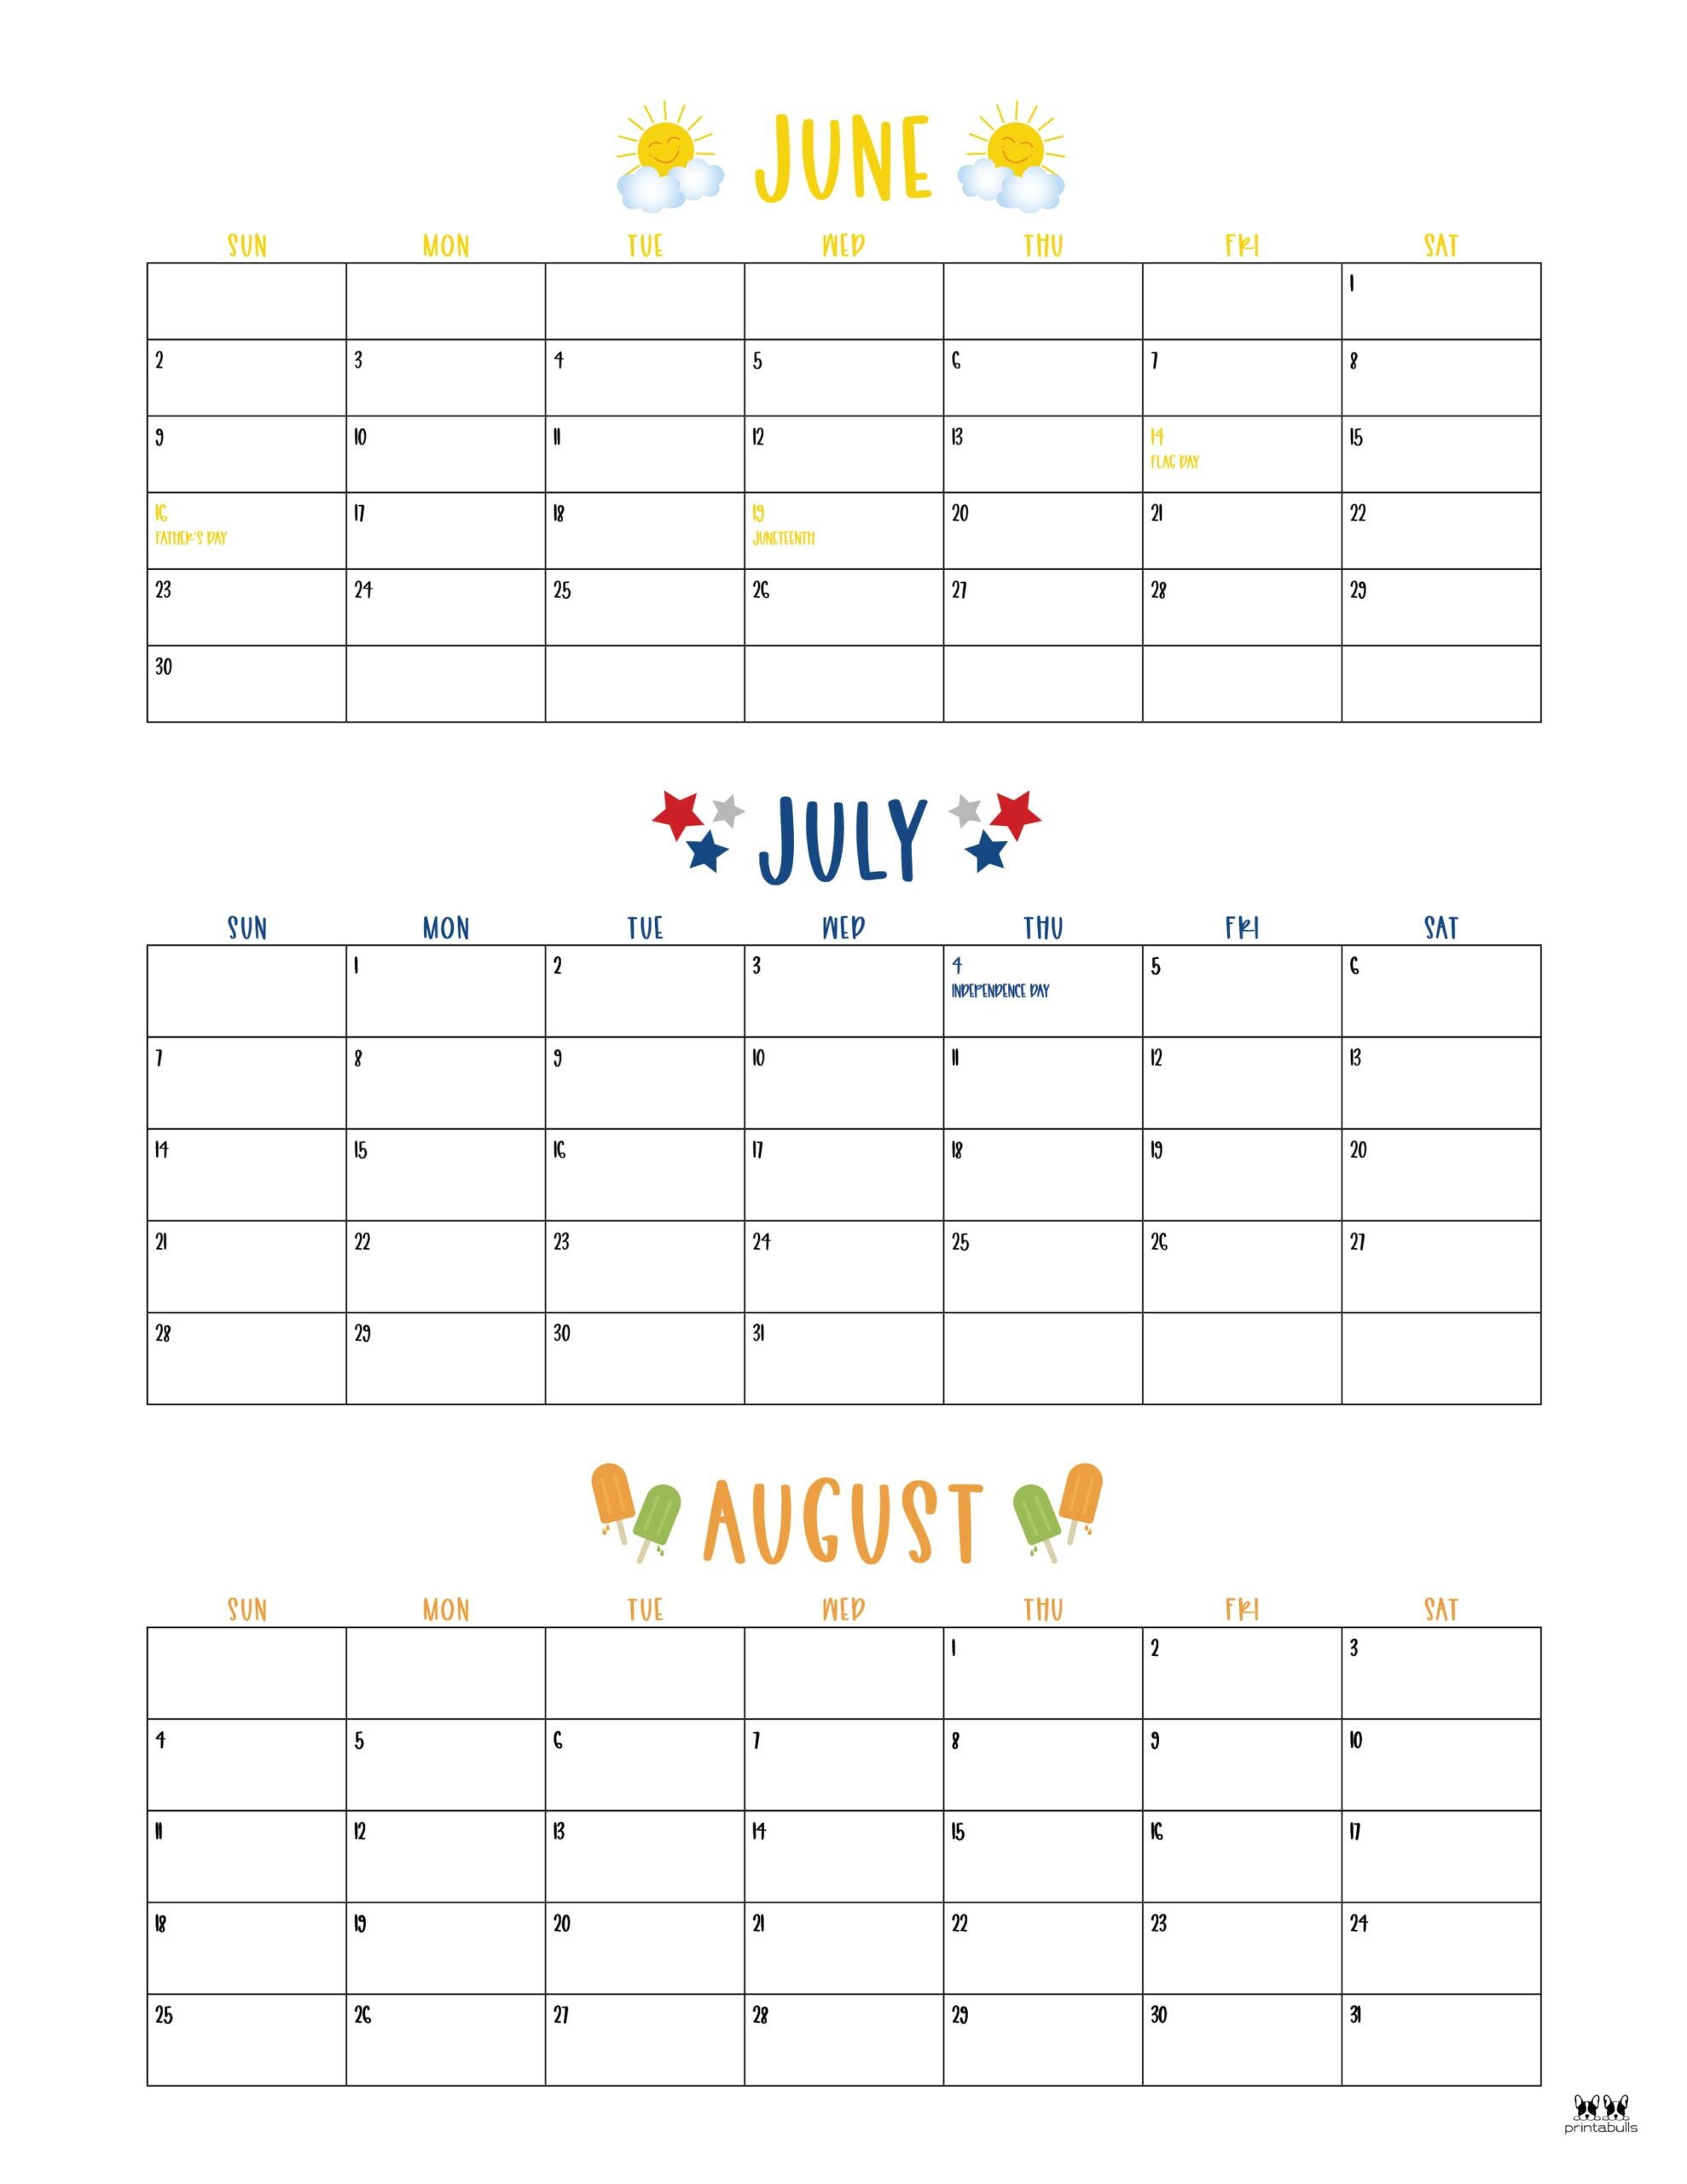 2024-summer-calendars-18-free-printables-printabulls